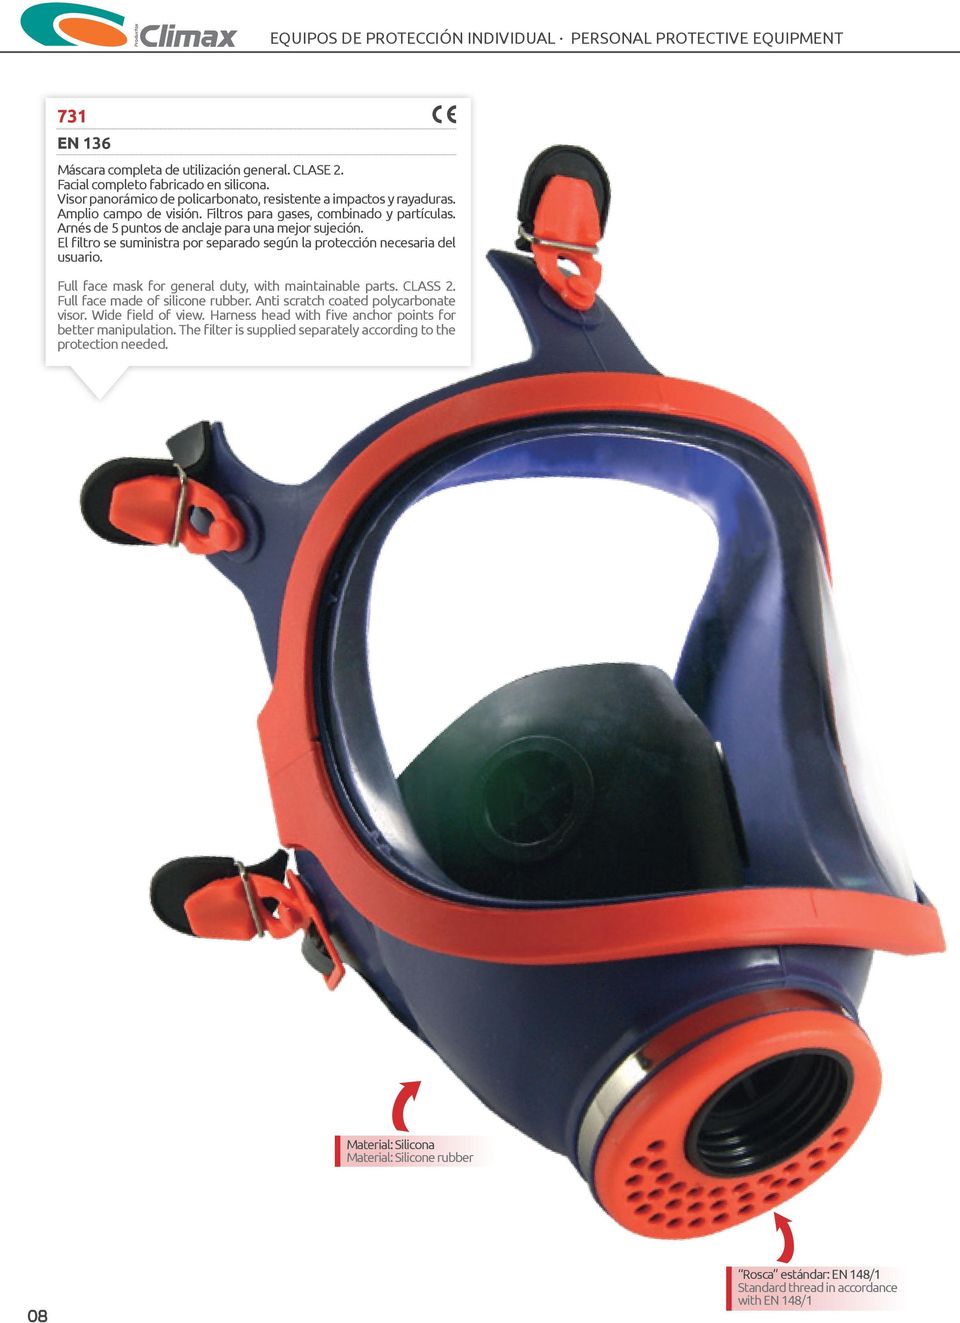 El filtro se suministra por separado según la protección necesaria del usuario. Full face mask for general duty, with maintainable parts. CLSS 2. Full face made of silicone rubber.